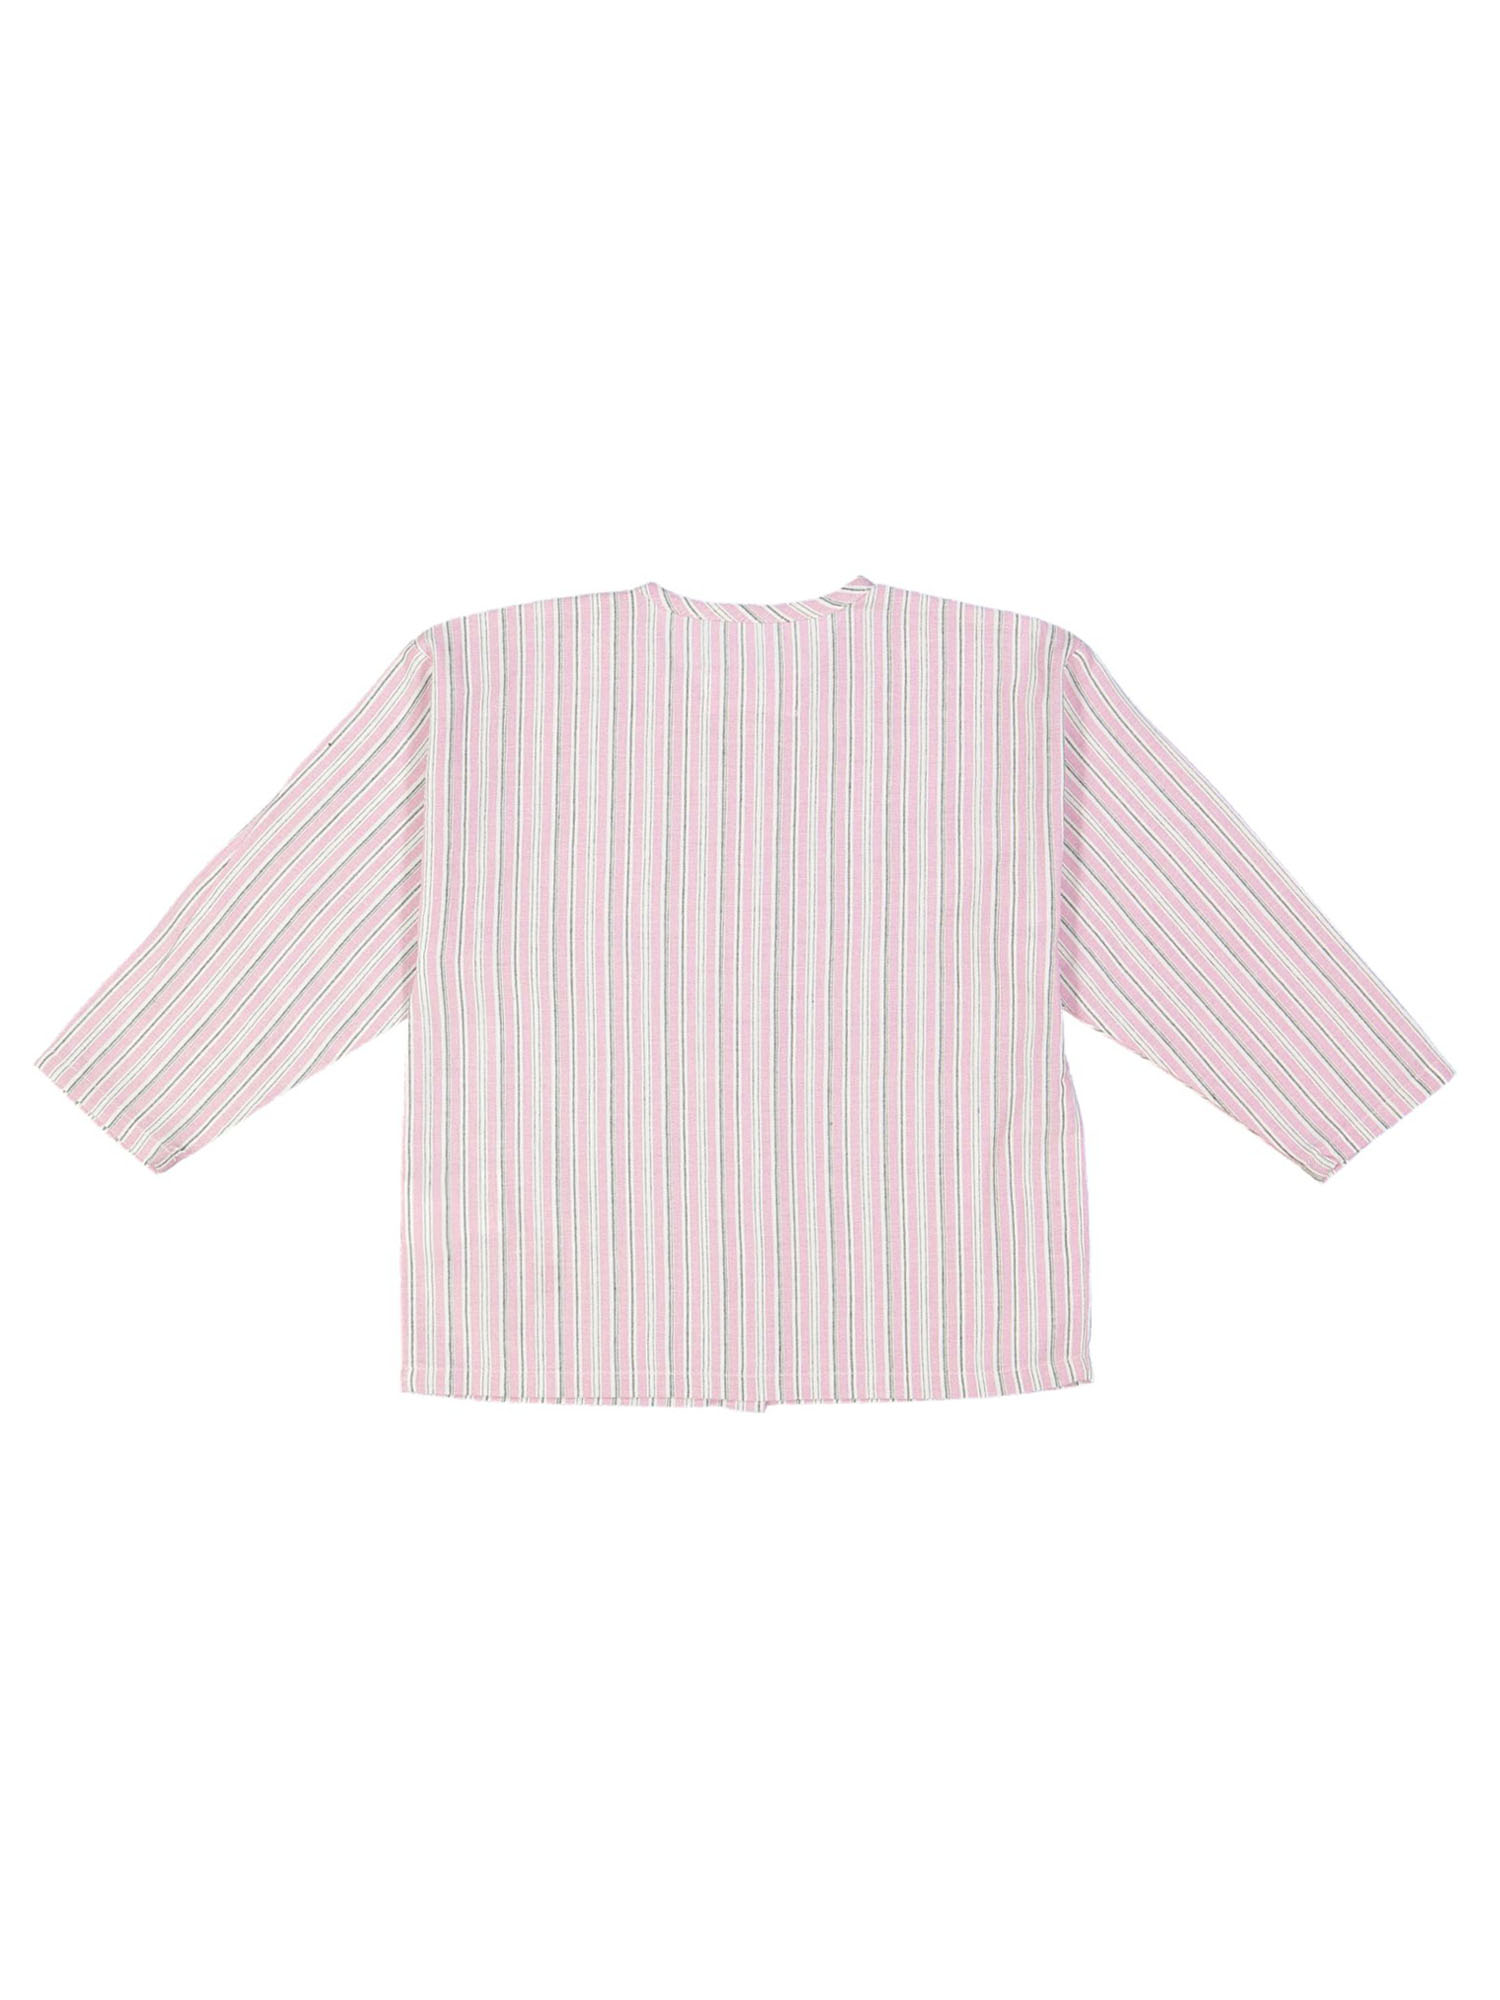 chemise rayée rose clair